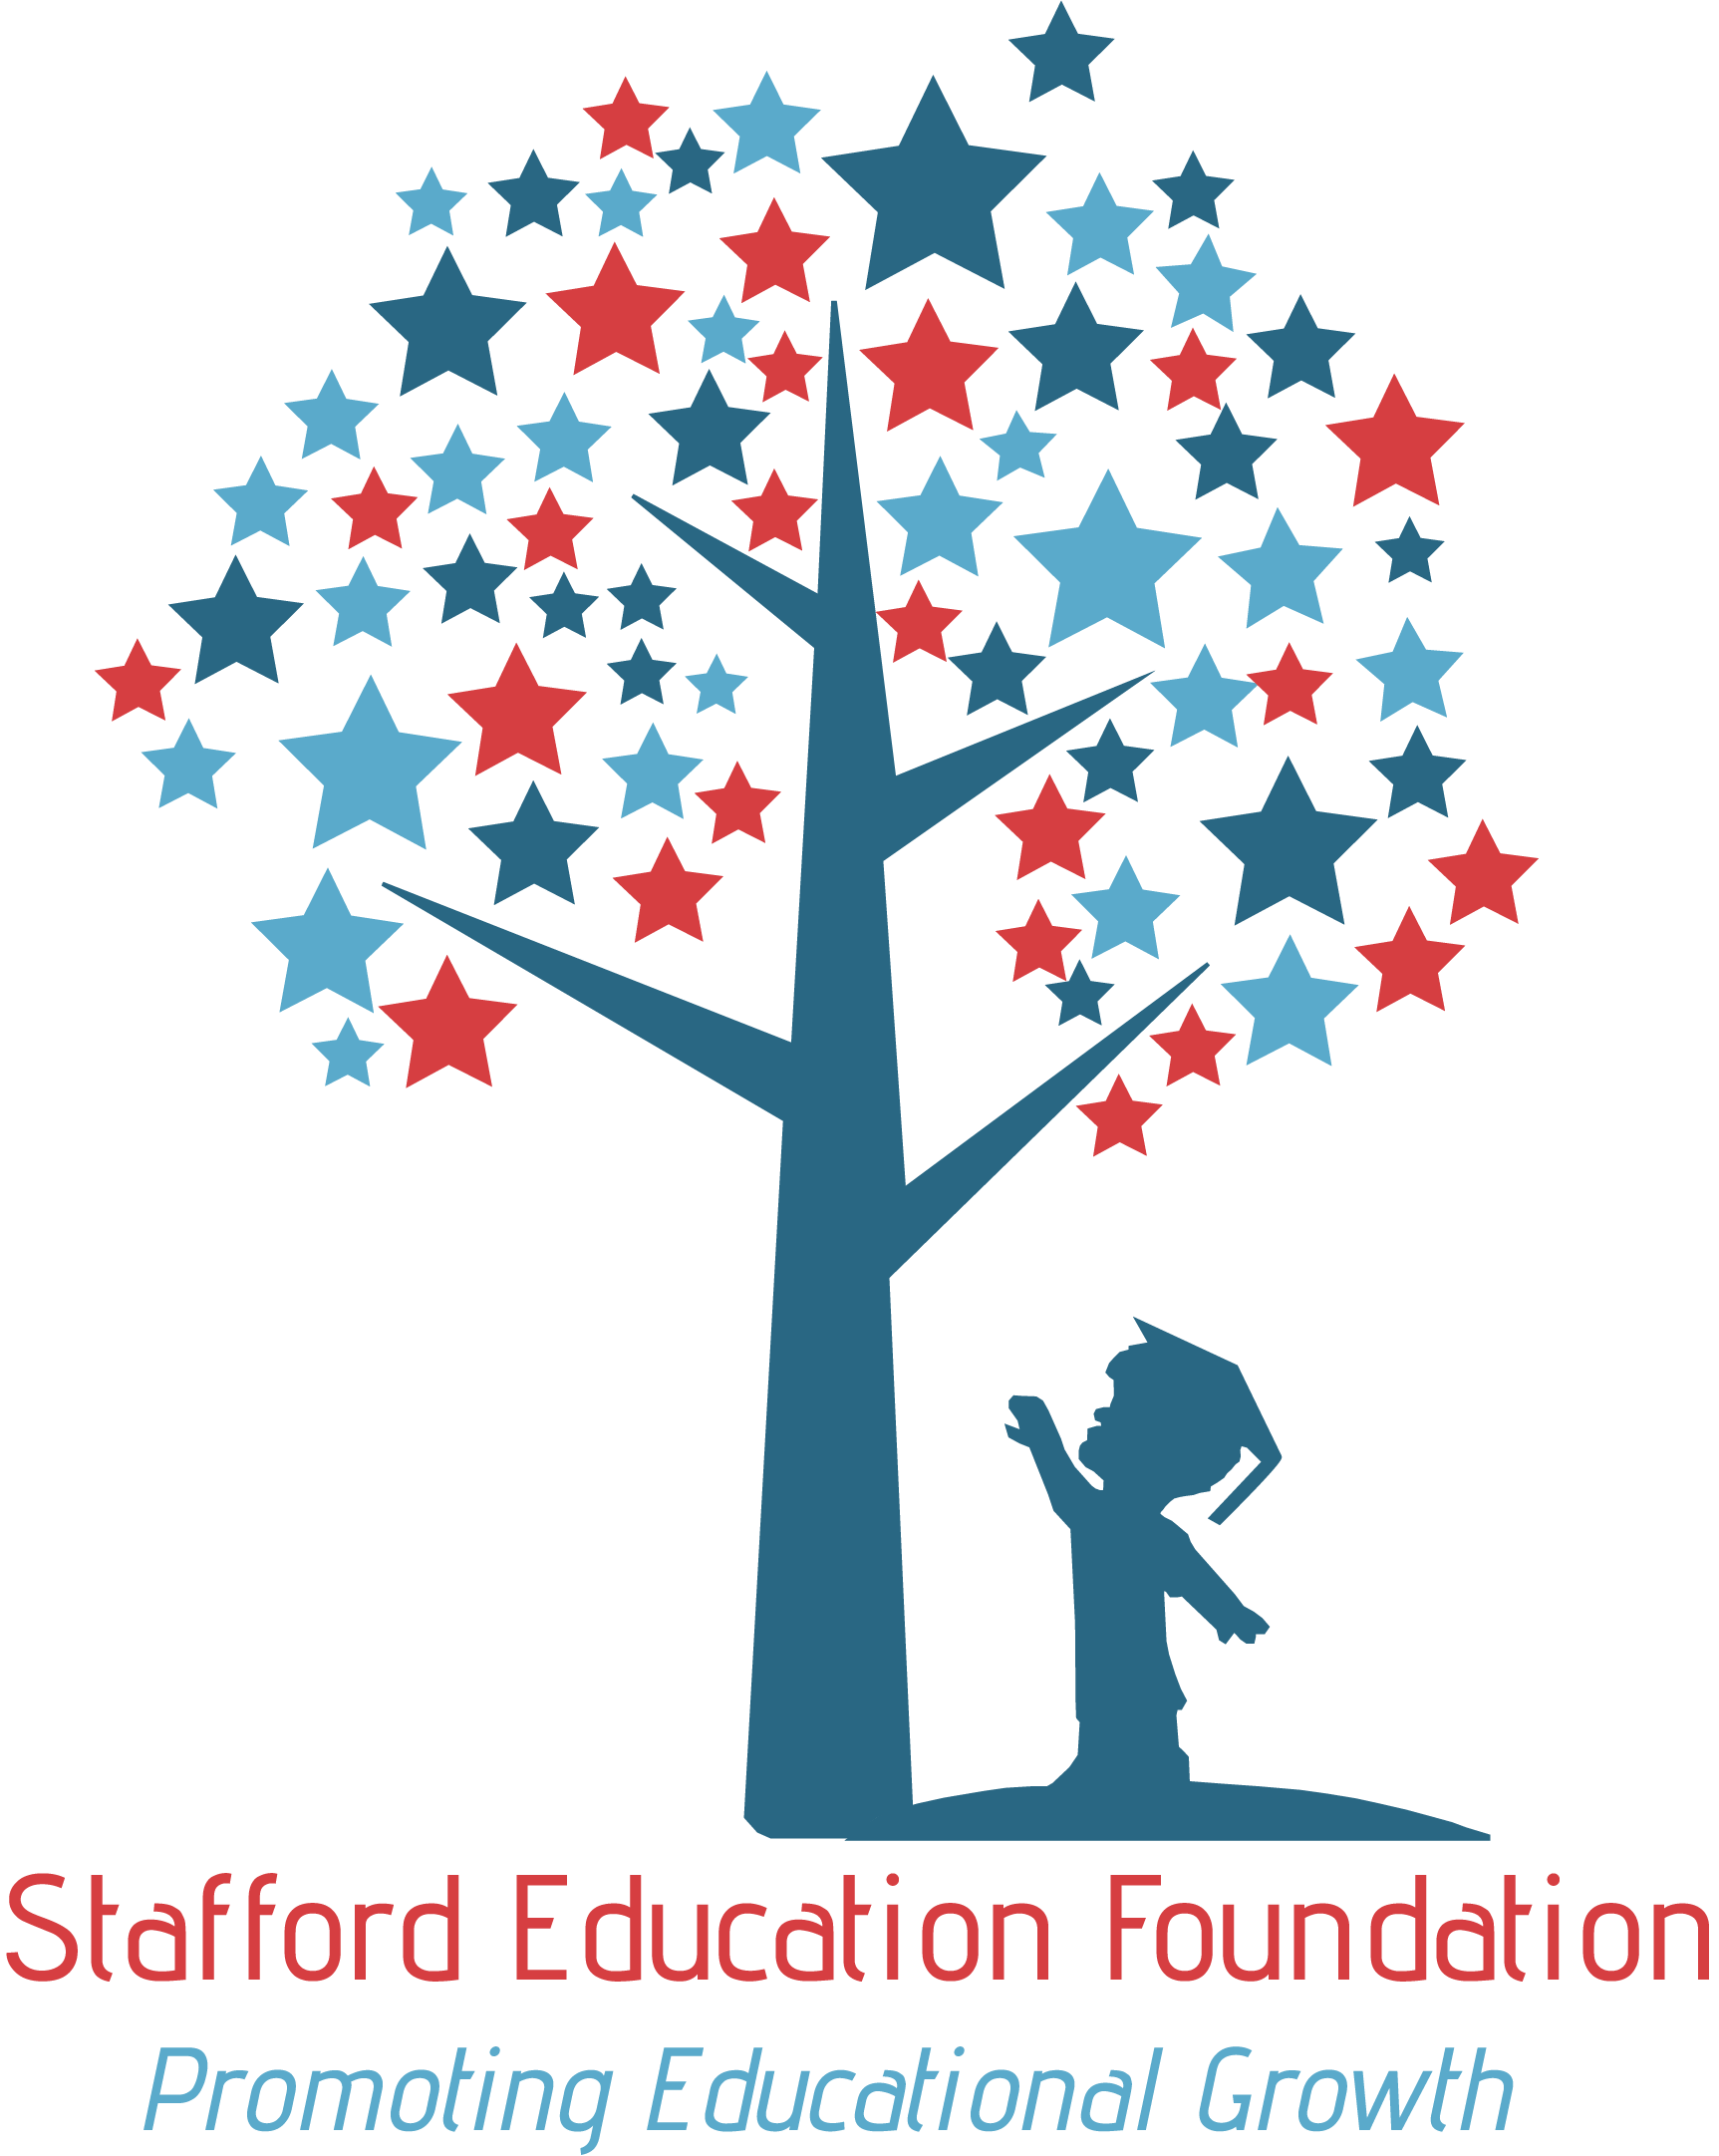 The Stafford Education Foundation